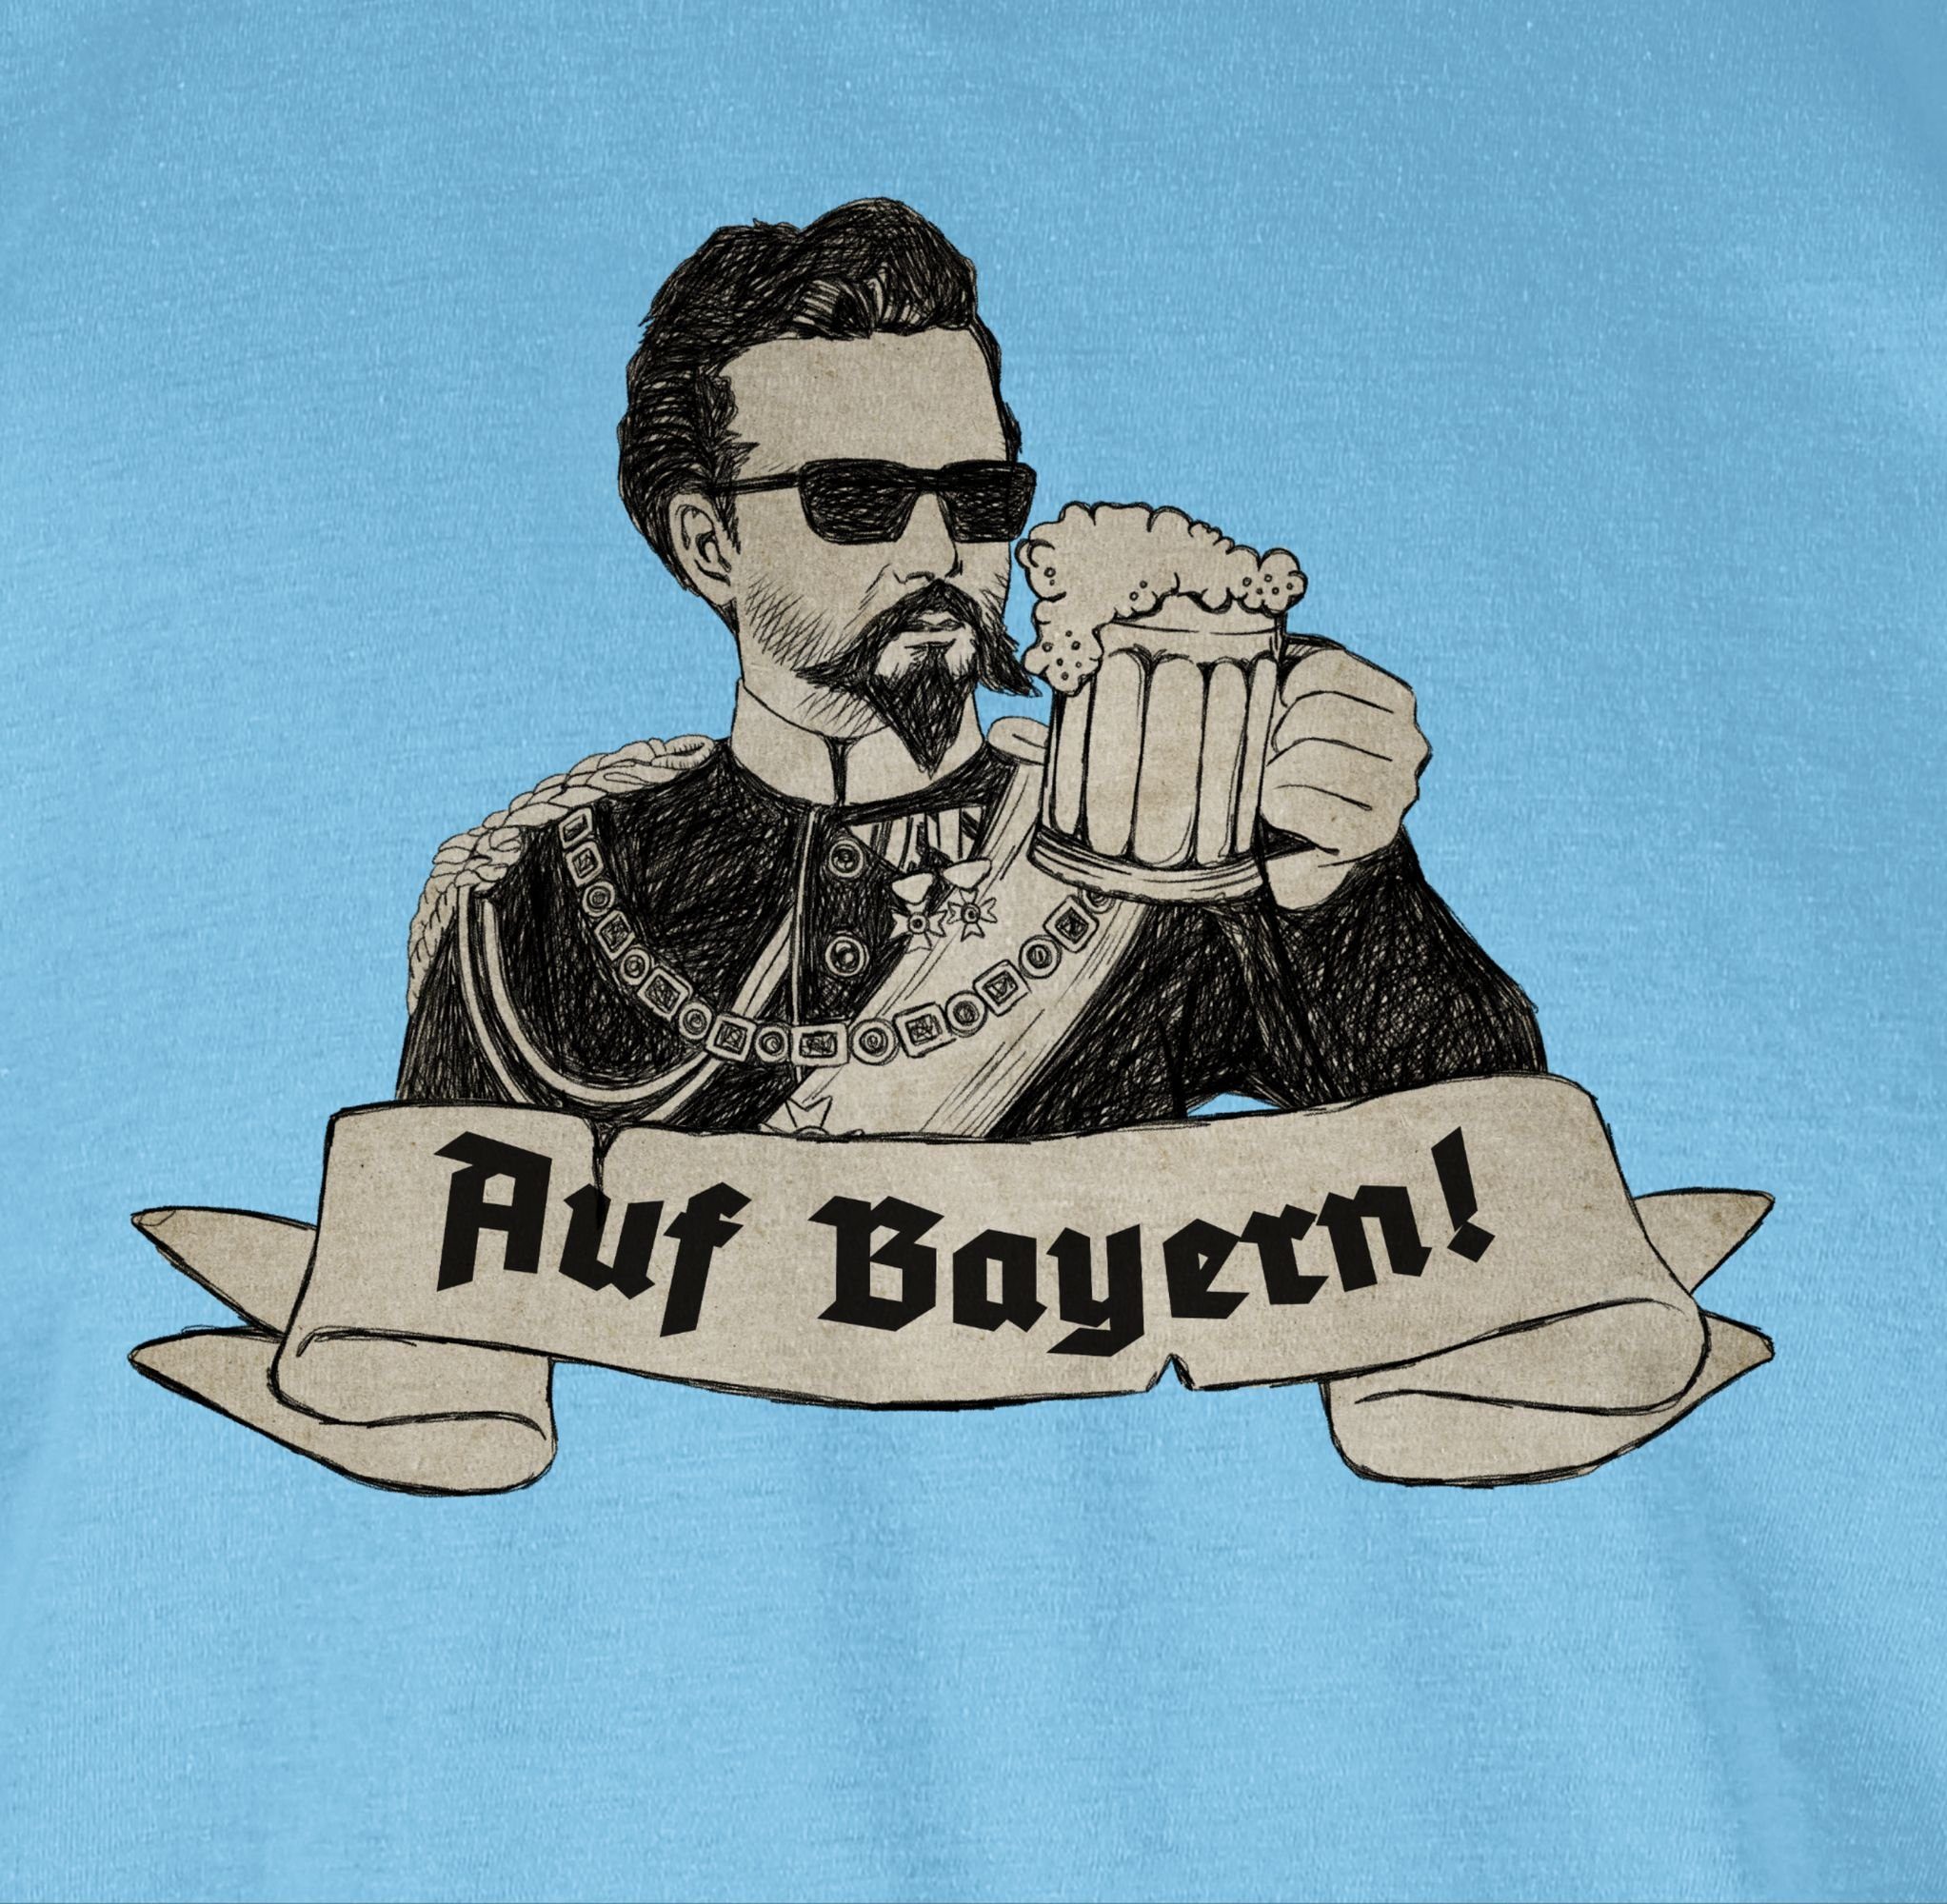 Shirtracer T-Shirt Mode Prost 02 Oktoberfest - für Ludwig Auf Hellblau Bayern König Bayern Herren